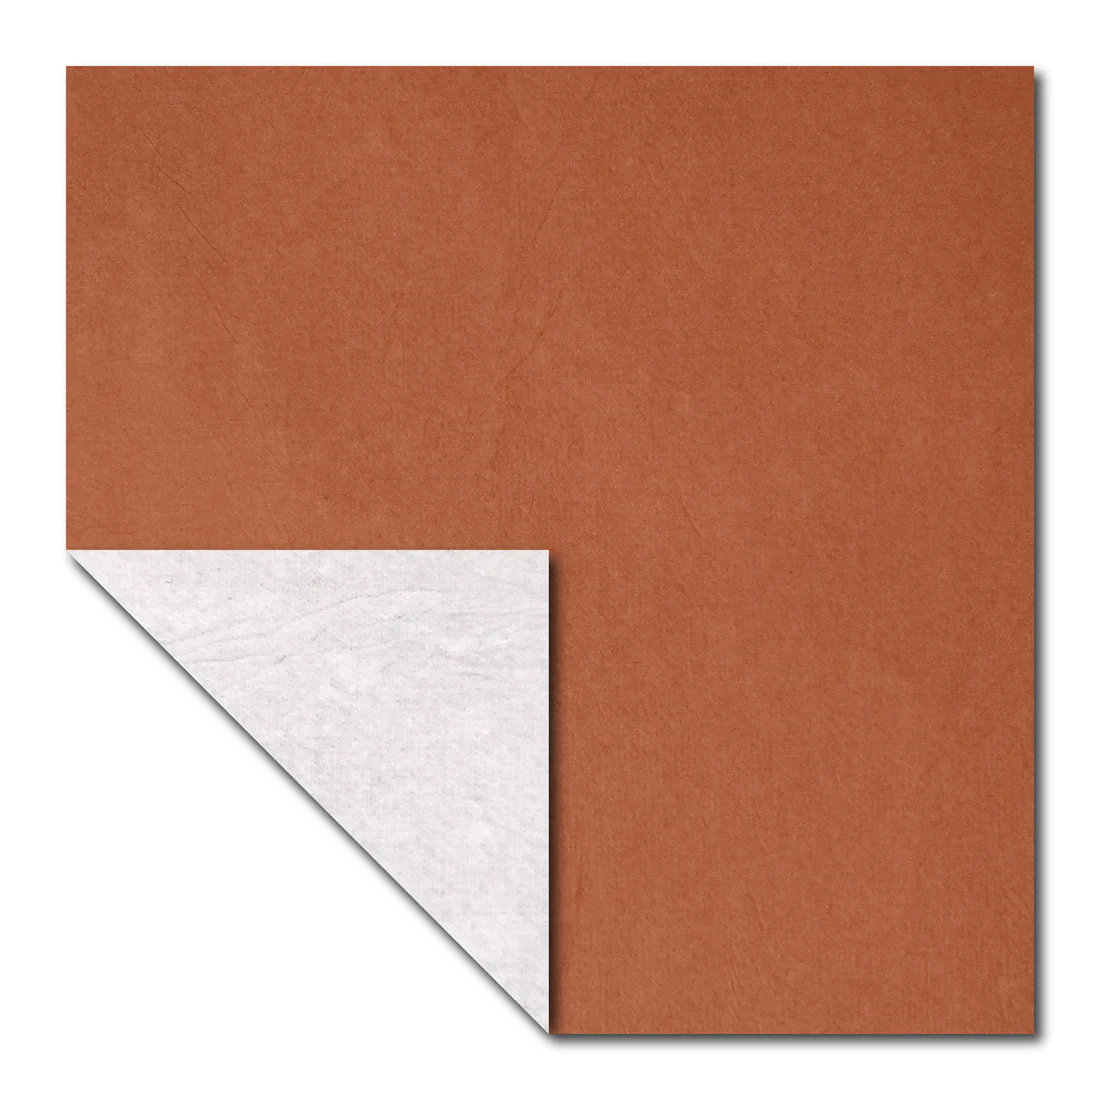  50 Mulberry Paper Sheets Plain Colors Origami Design